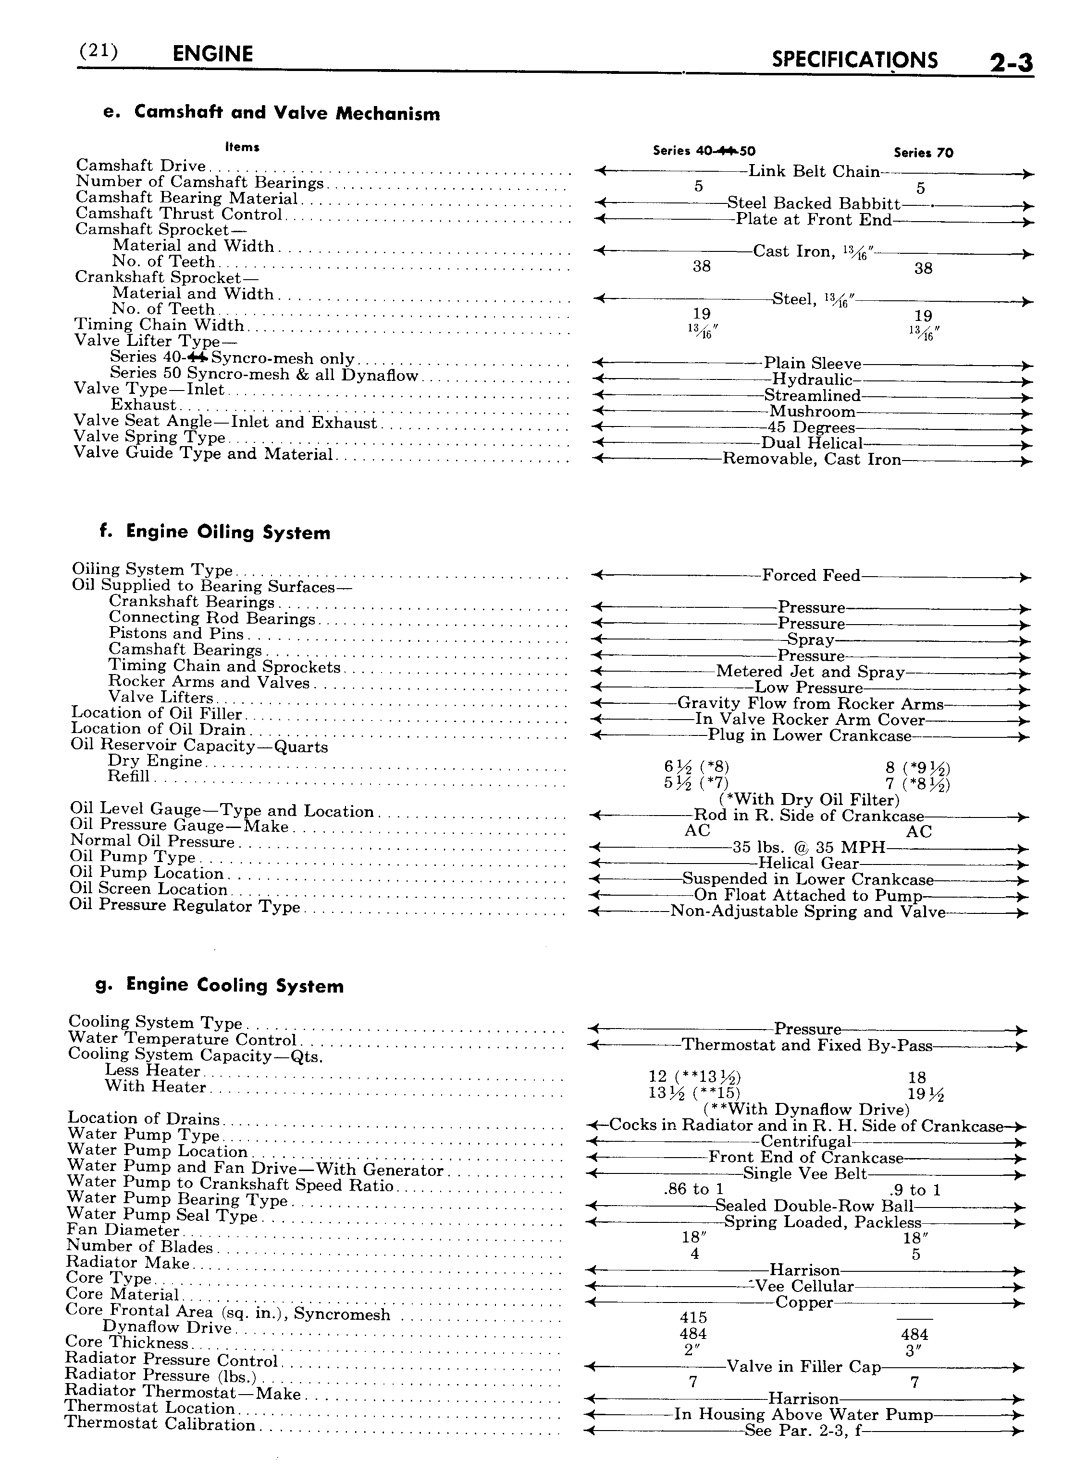 n_03 1951 Buick Shop Manual - Engine-003-003.jpg